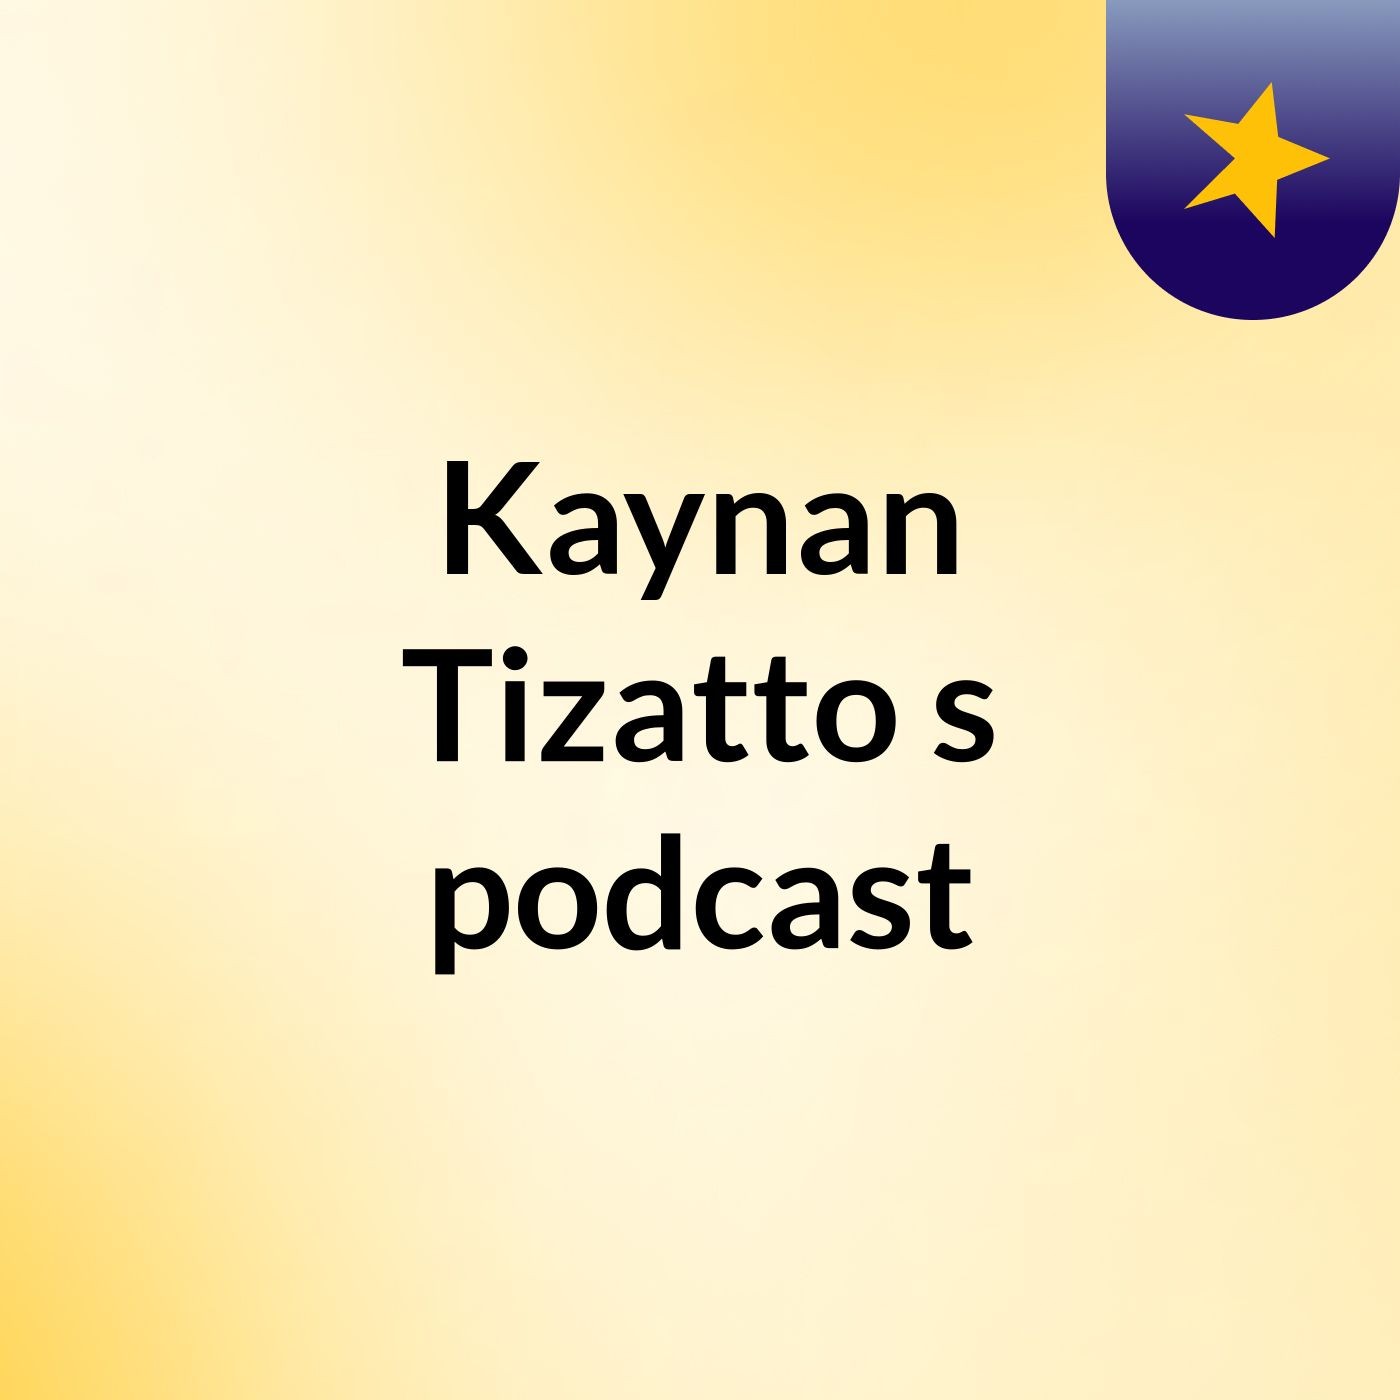 Kaynan Tizatto's podcast